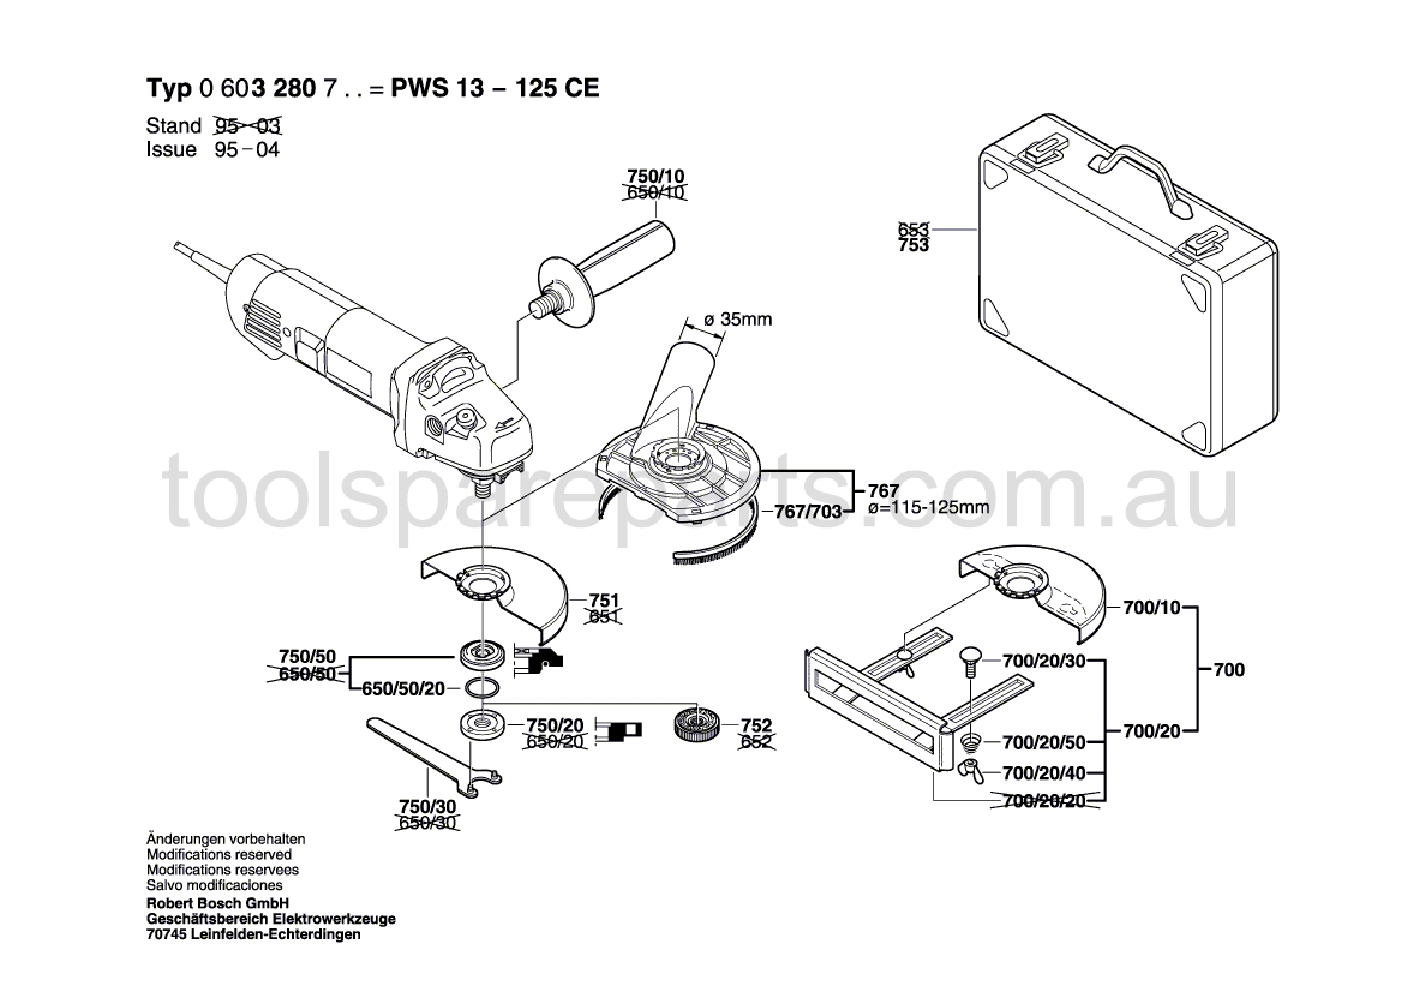 Bosch PWS 13-125 CE 0603280737  Diagram 2